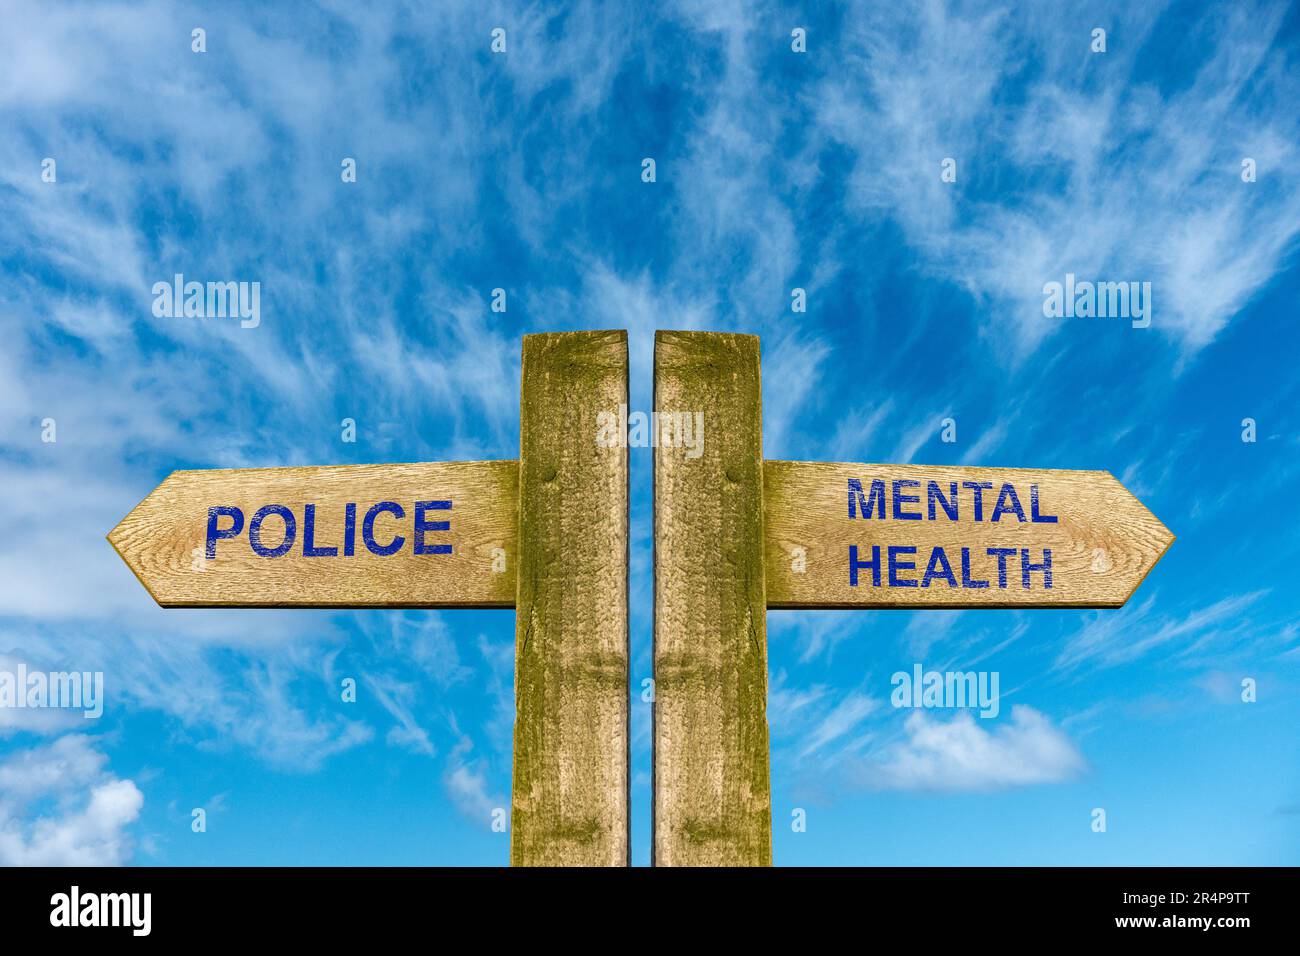 Police, met police, Mental Health Emergency Response concept britannique Banque D'Images